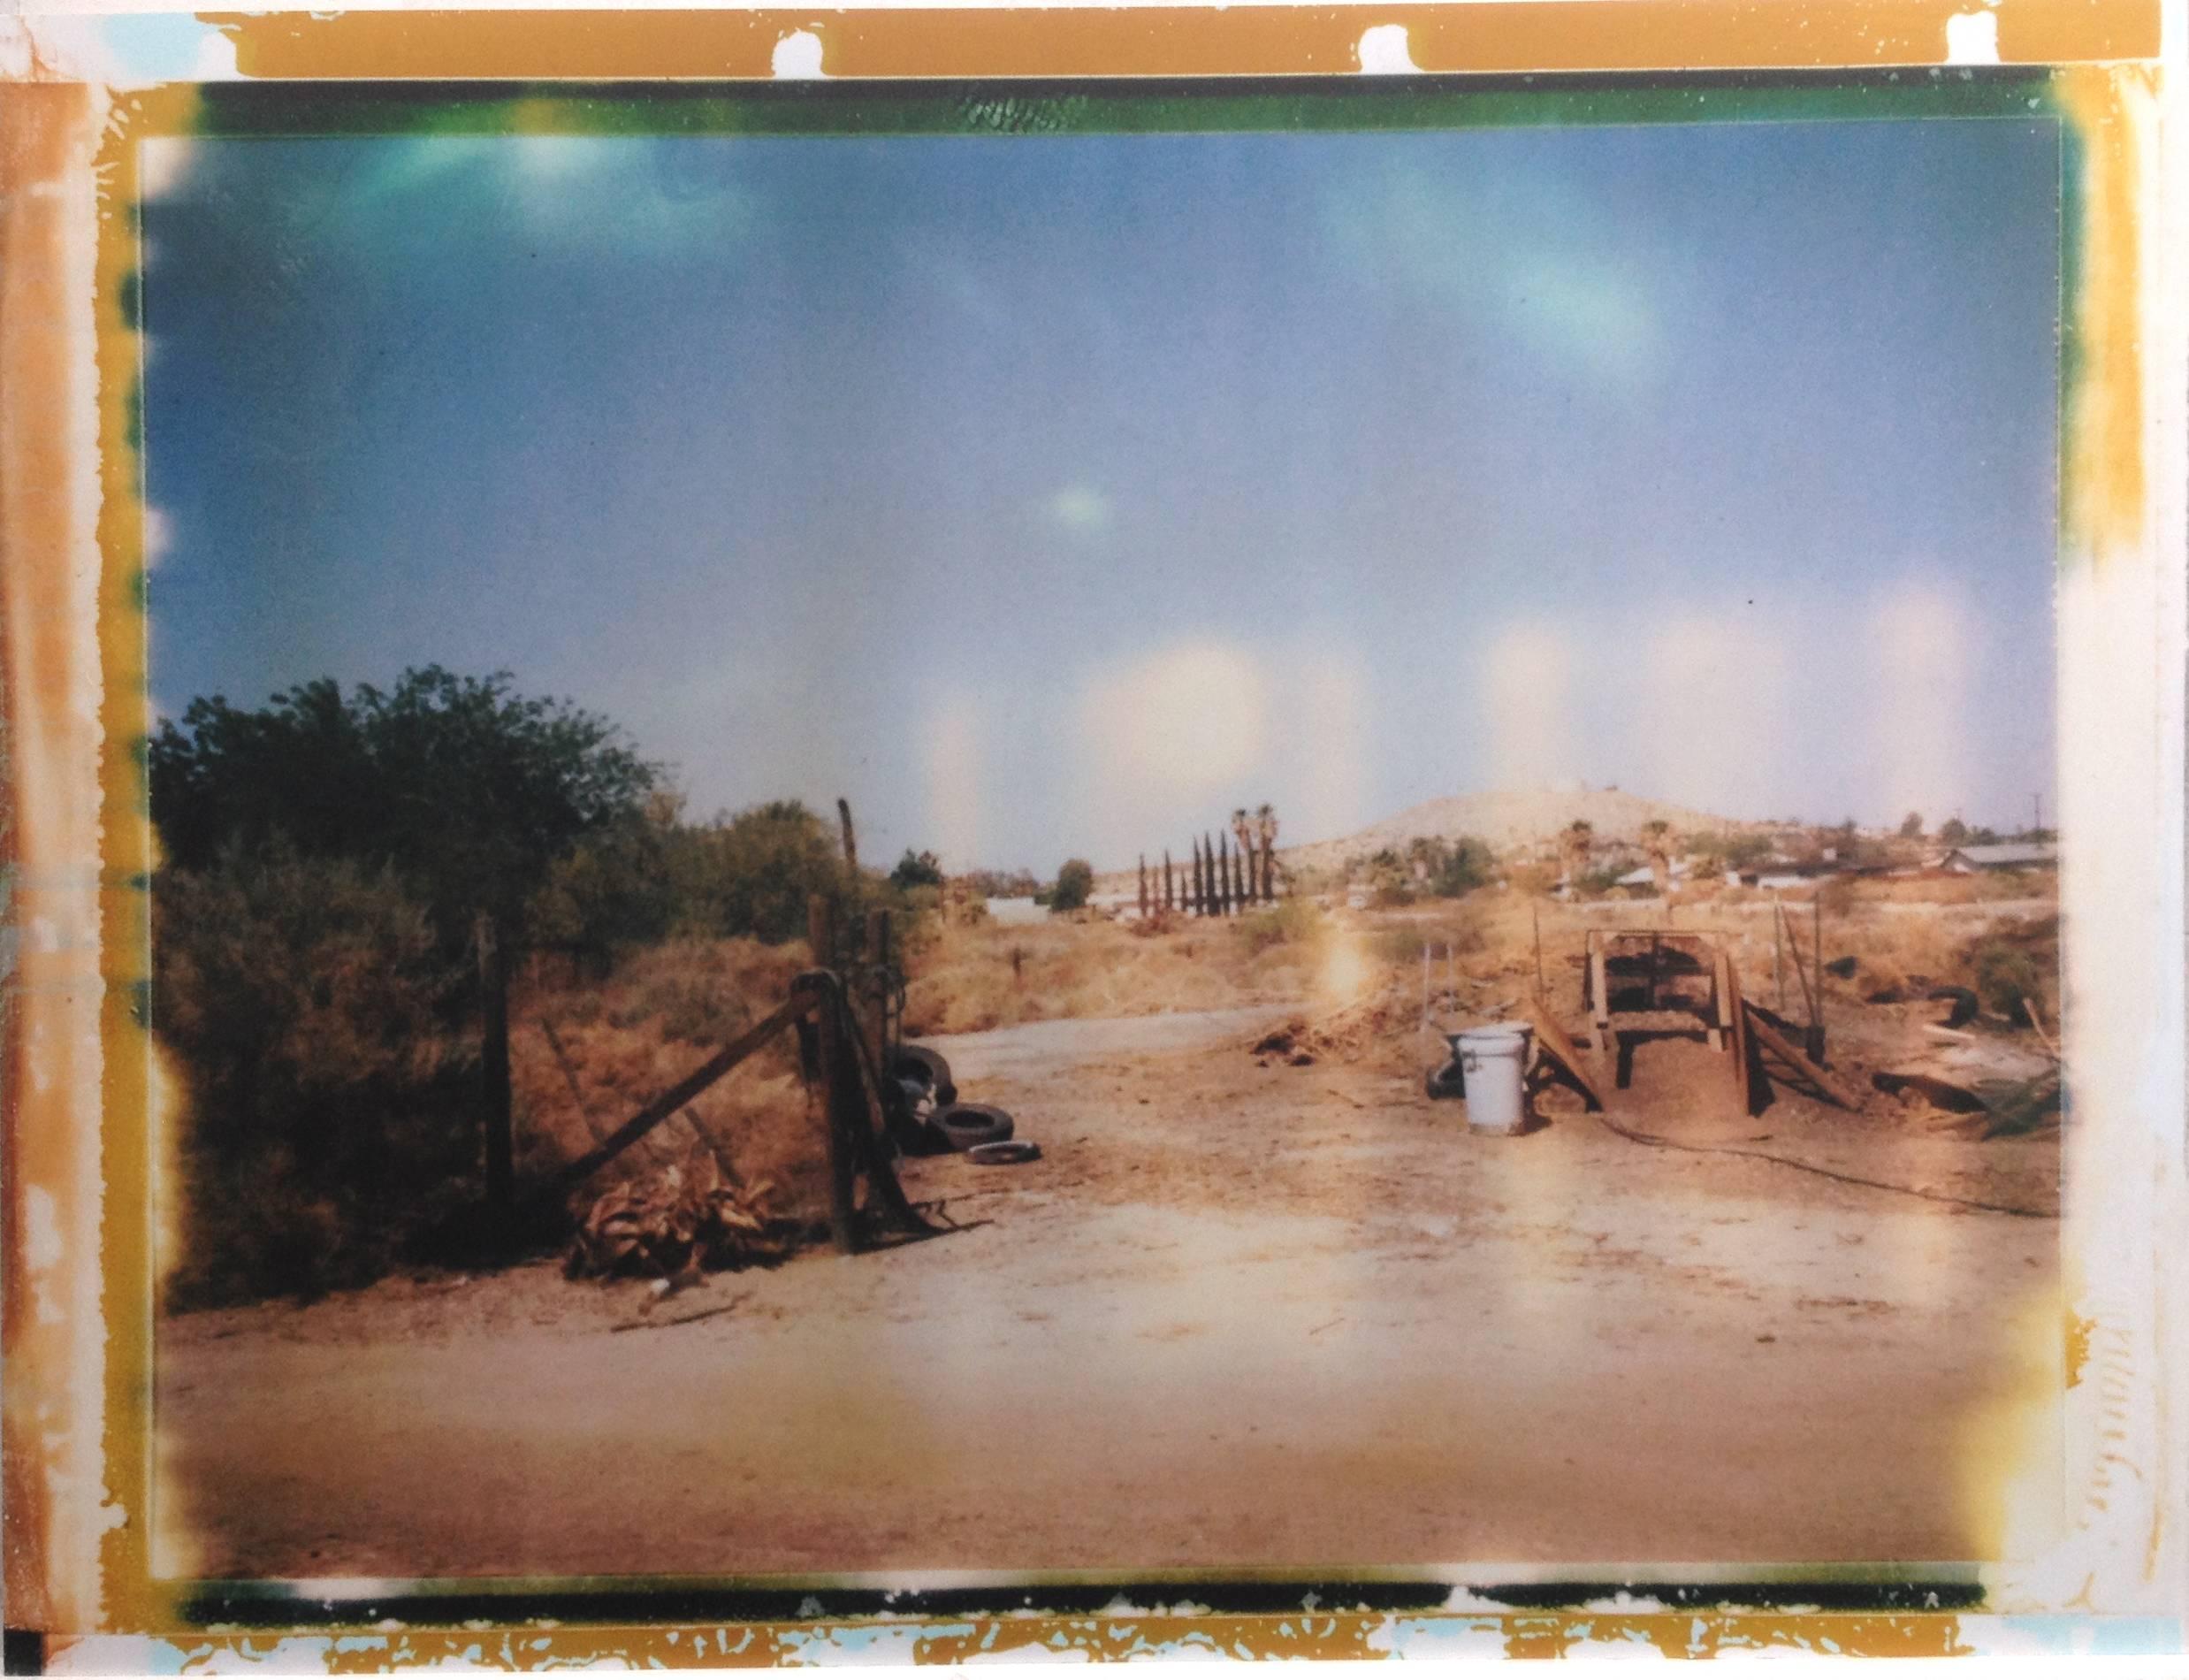 Stefanie Schneider Landscape Photograph - Jane's Place - 29 Palms, CA based on a Polaroid Original 